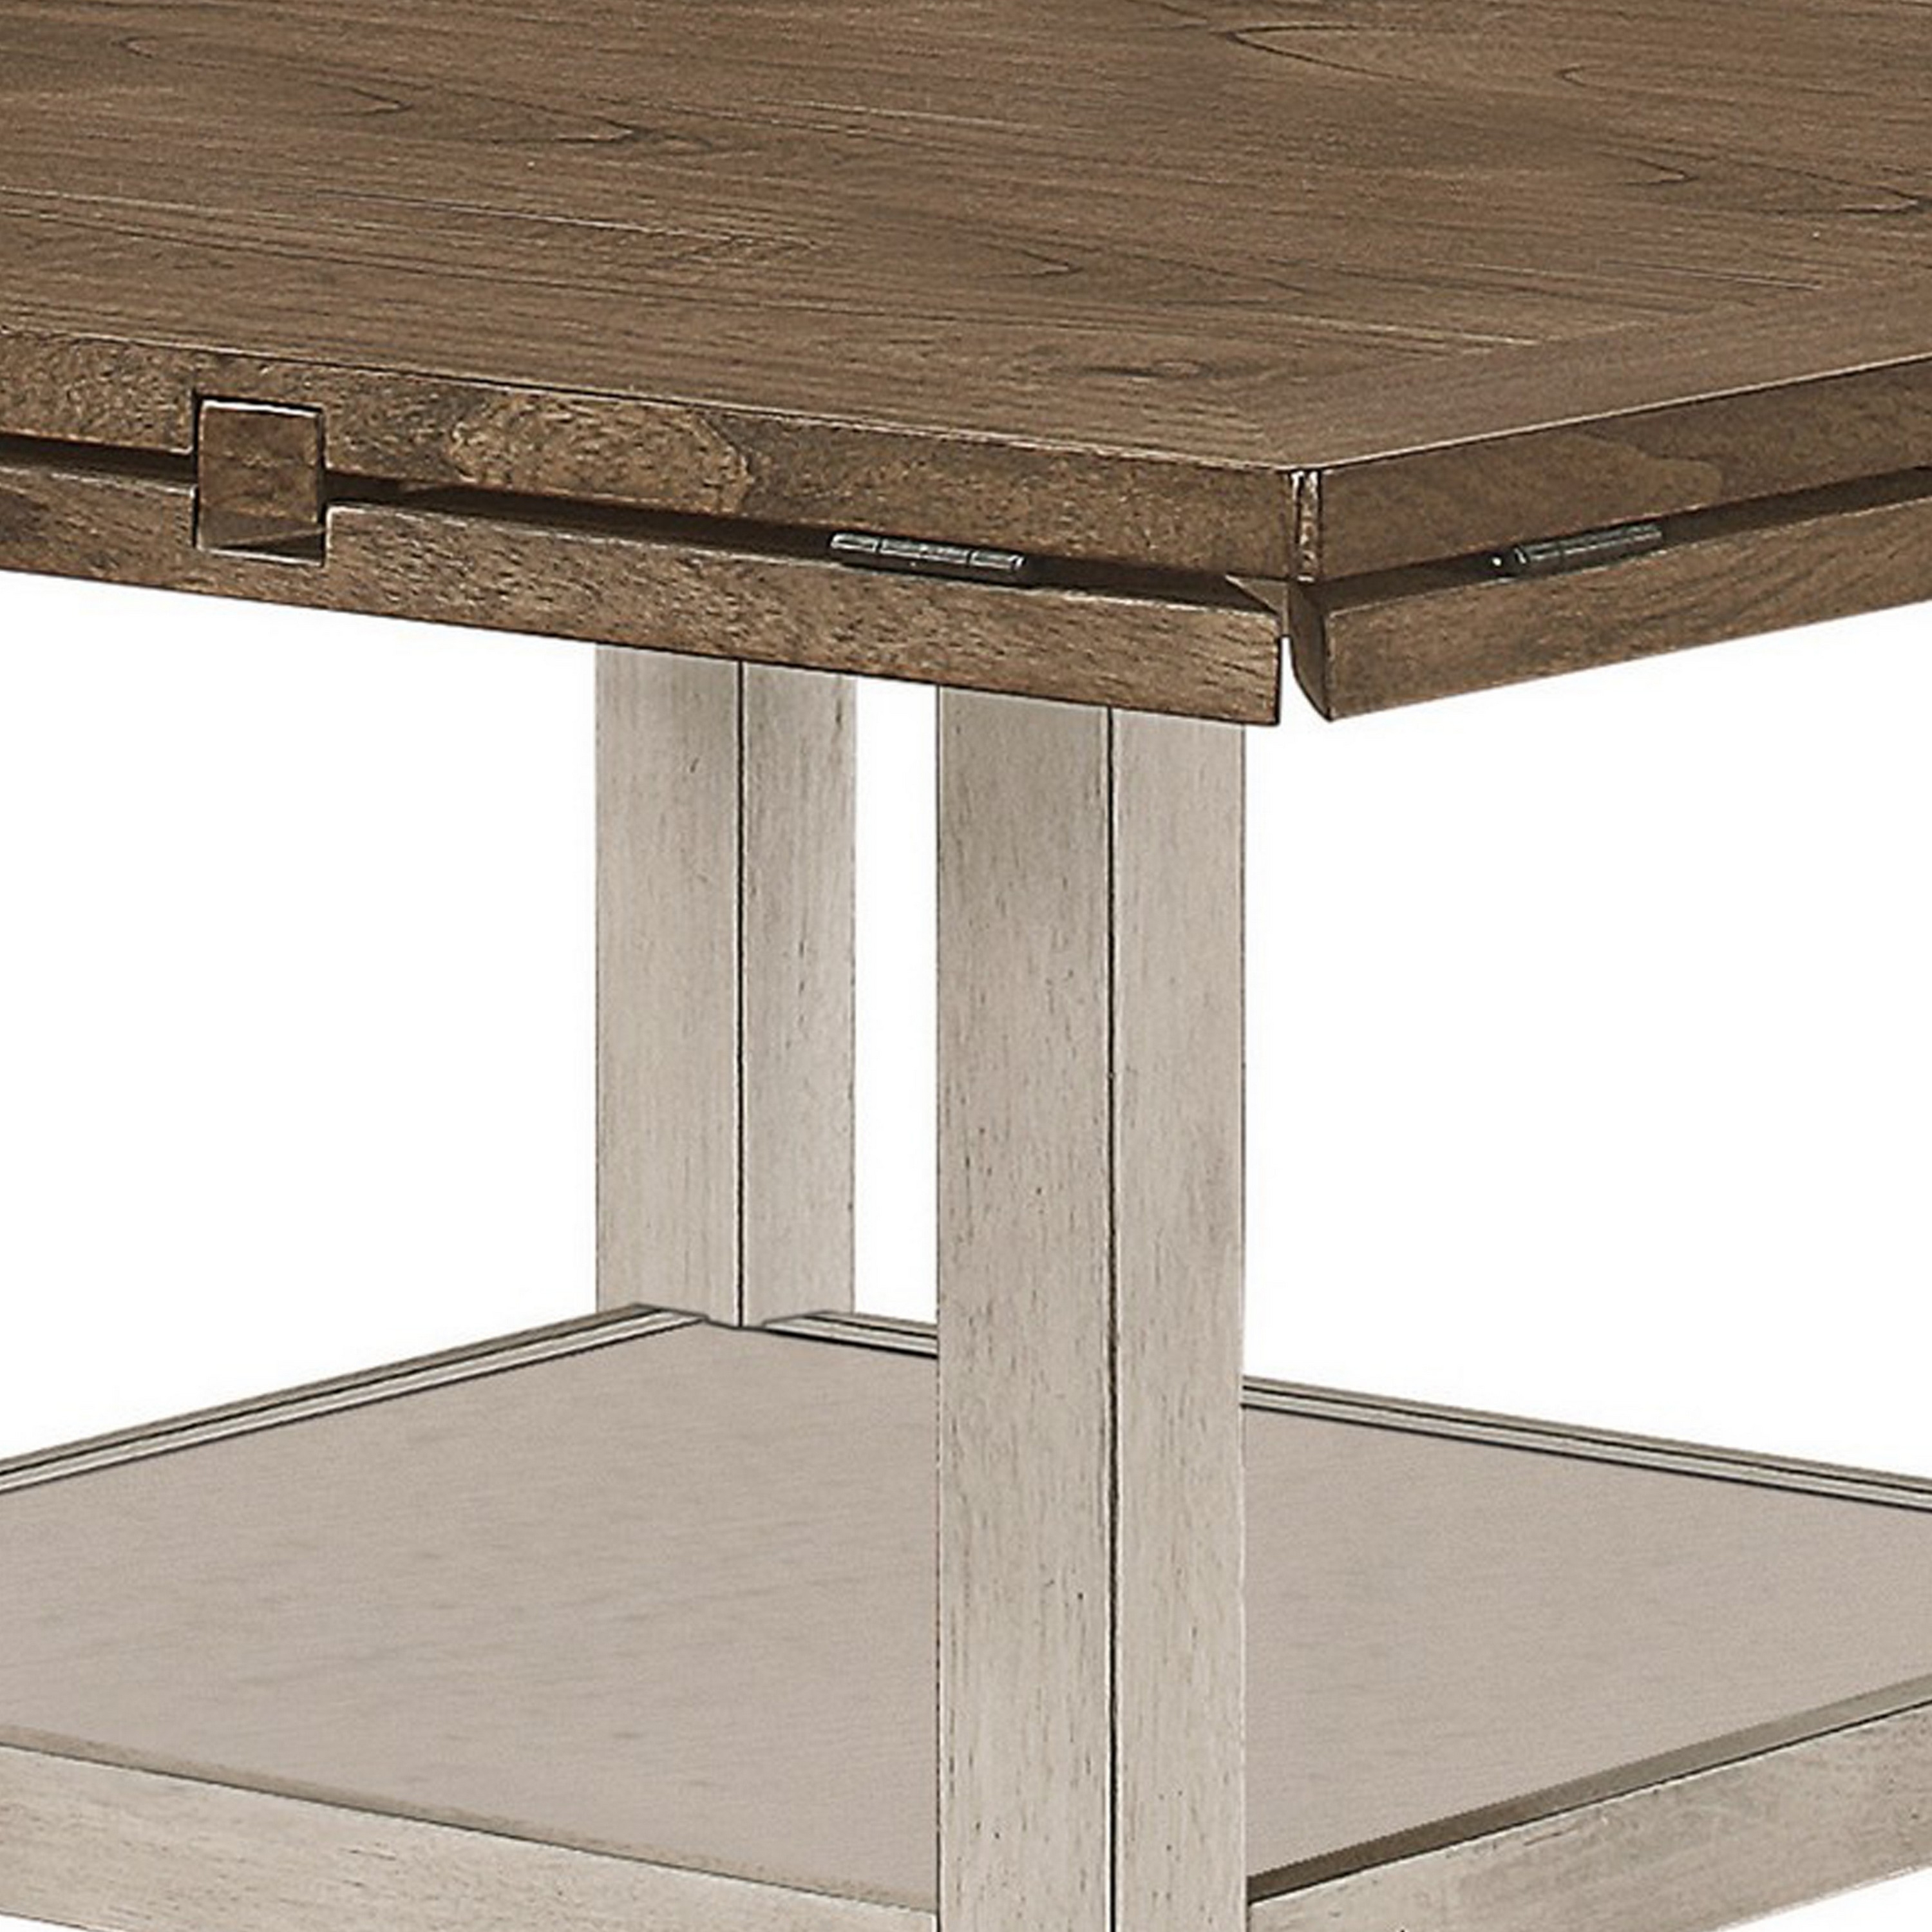 52-60 Inch Counter Height Table, Open Bottom Shelf, 4 Drop Leaves, Brown - Saltoro Sherpi